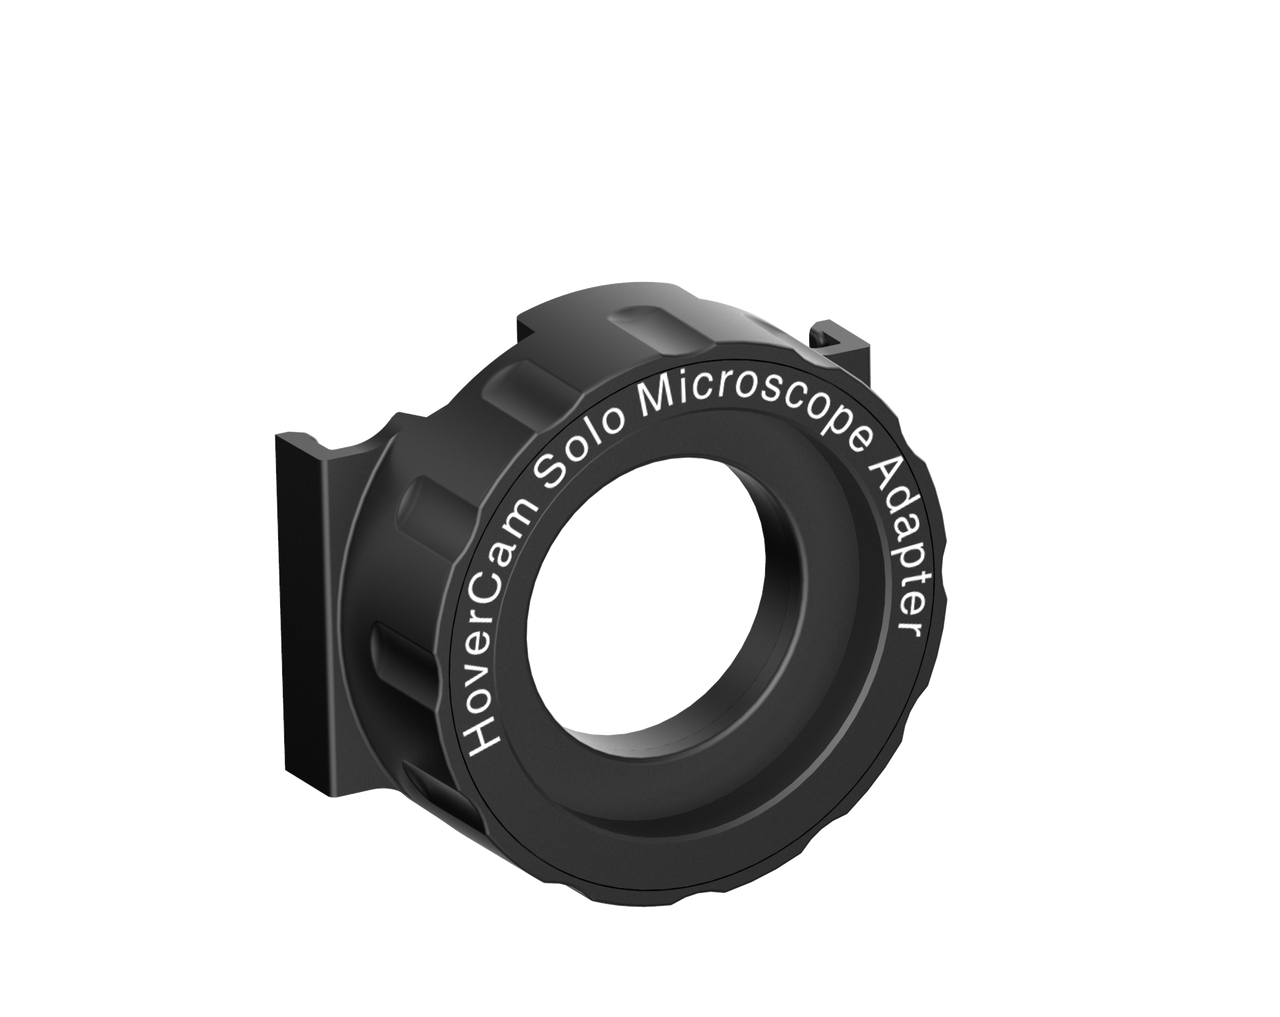 hovercam solo series microscope adapter